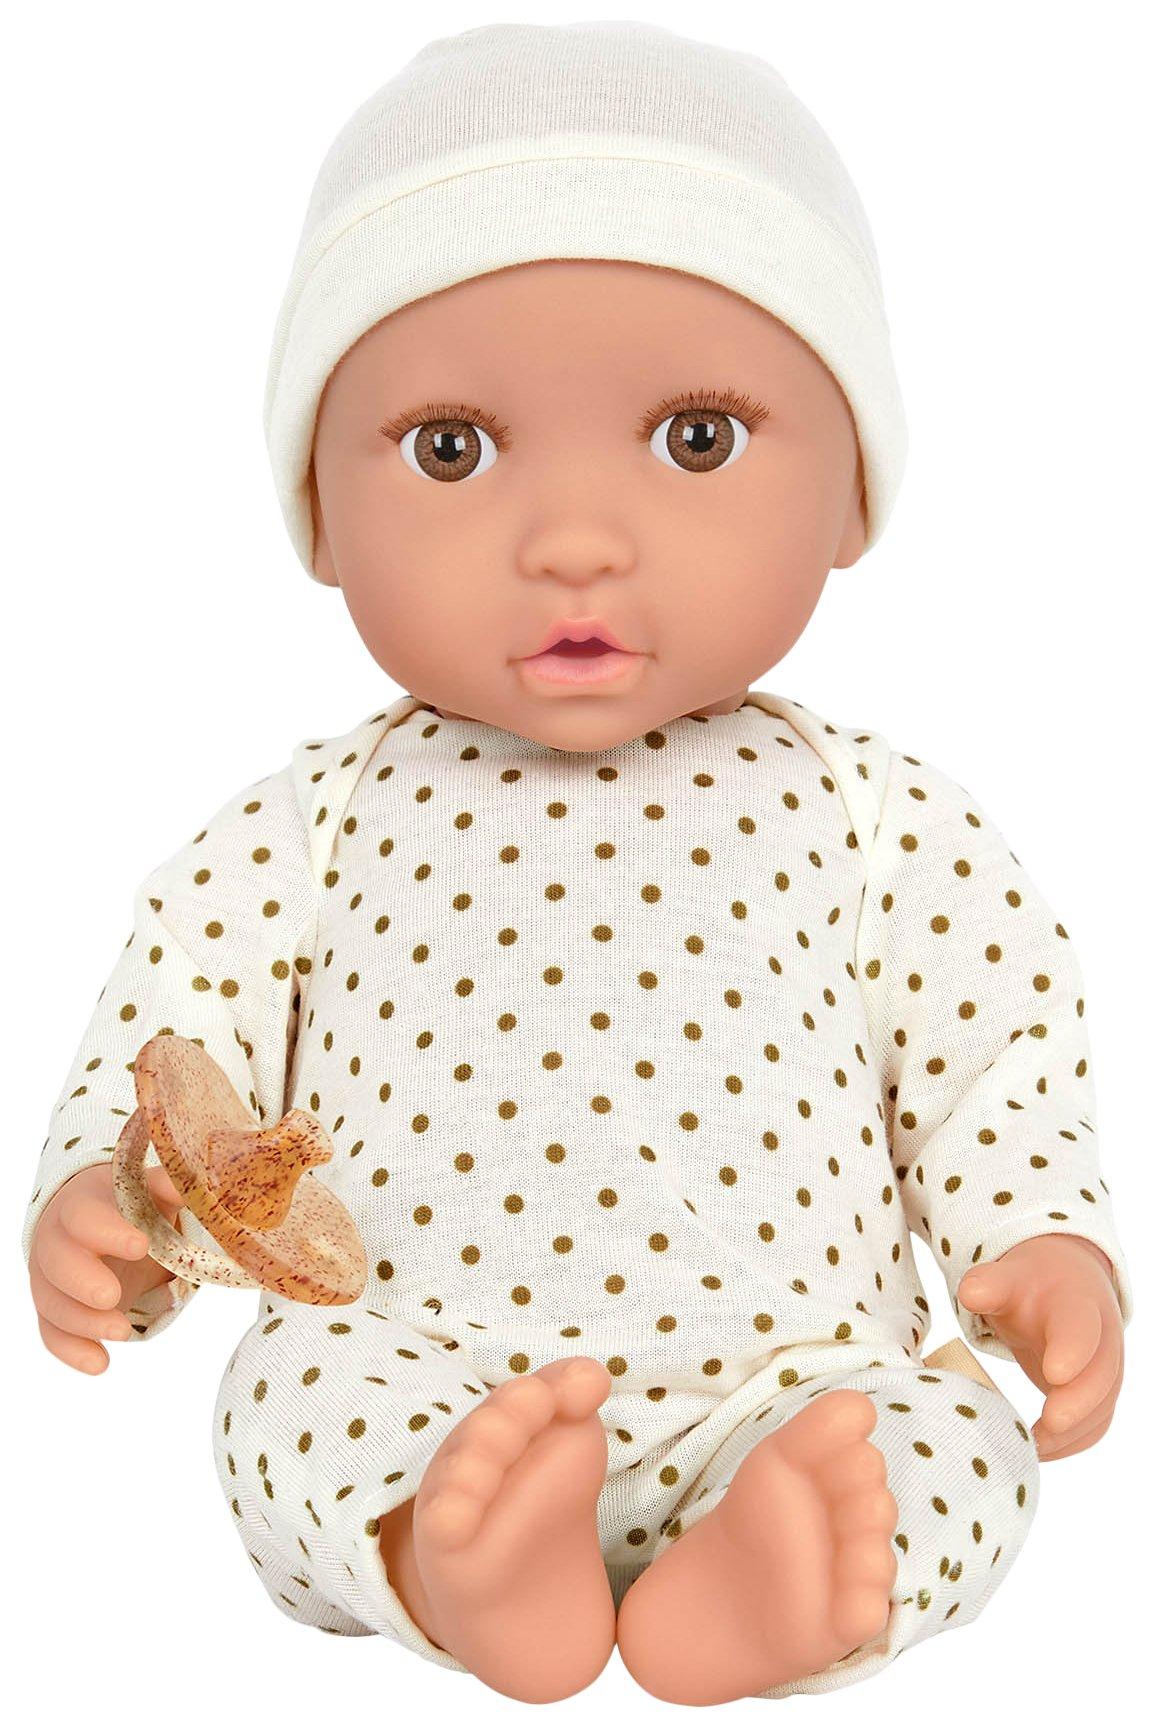 by Battat Baby Girl 14  Newborn Medium Skin Doll